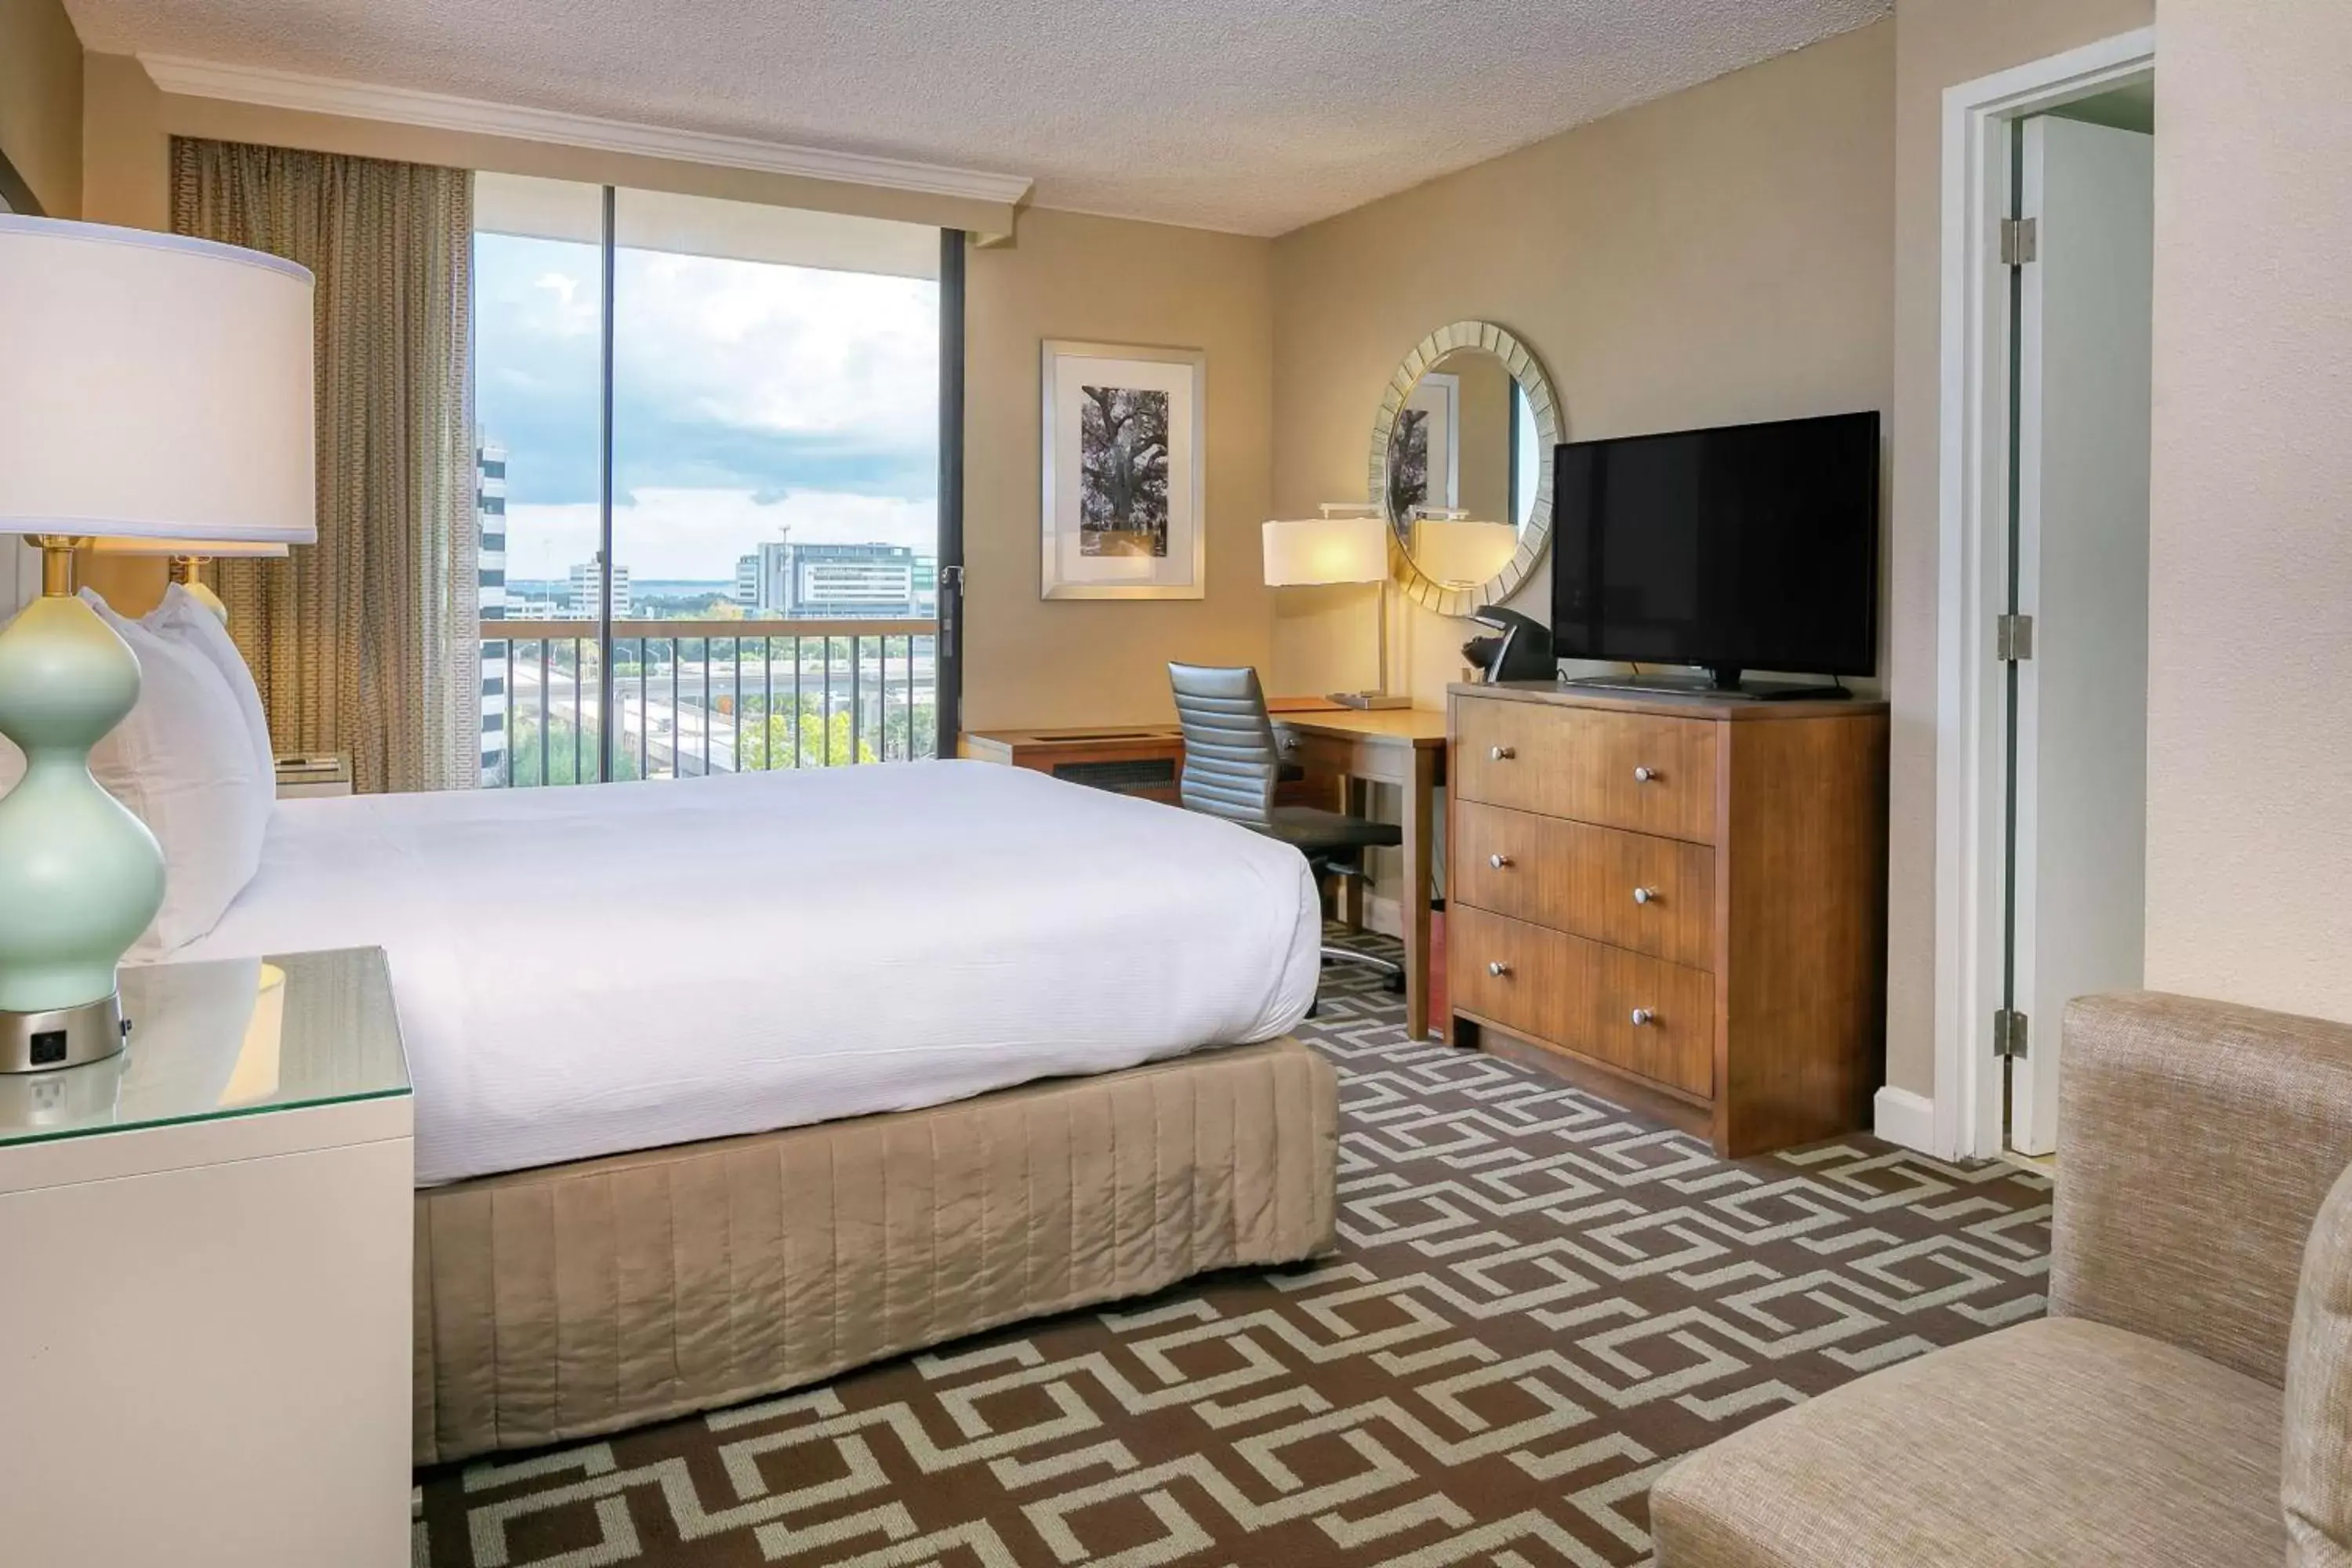 Bedroom in DoubleTree by Hilton Jacksonville Riverfront, FL